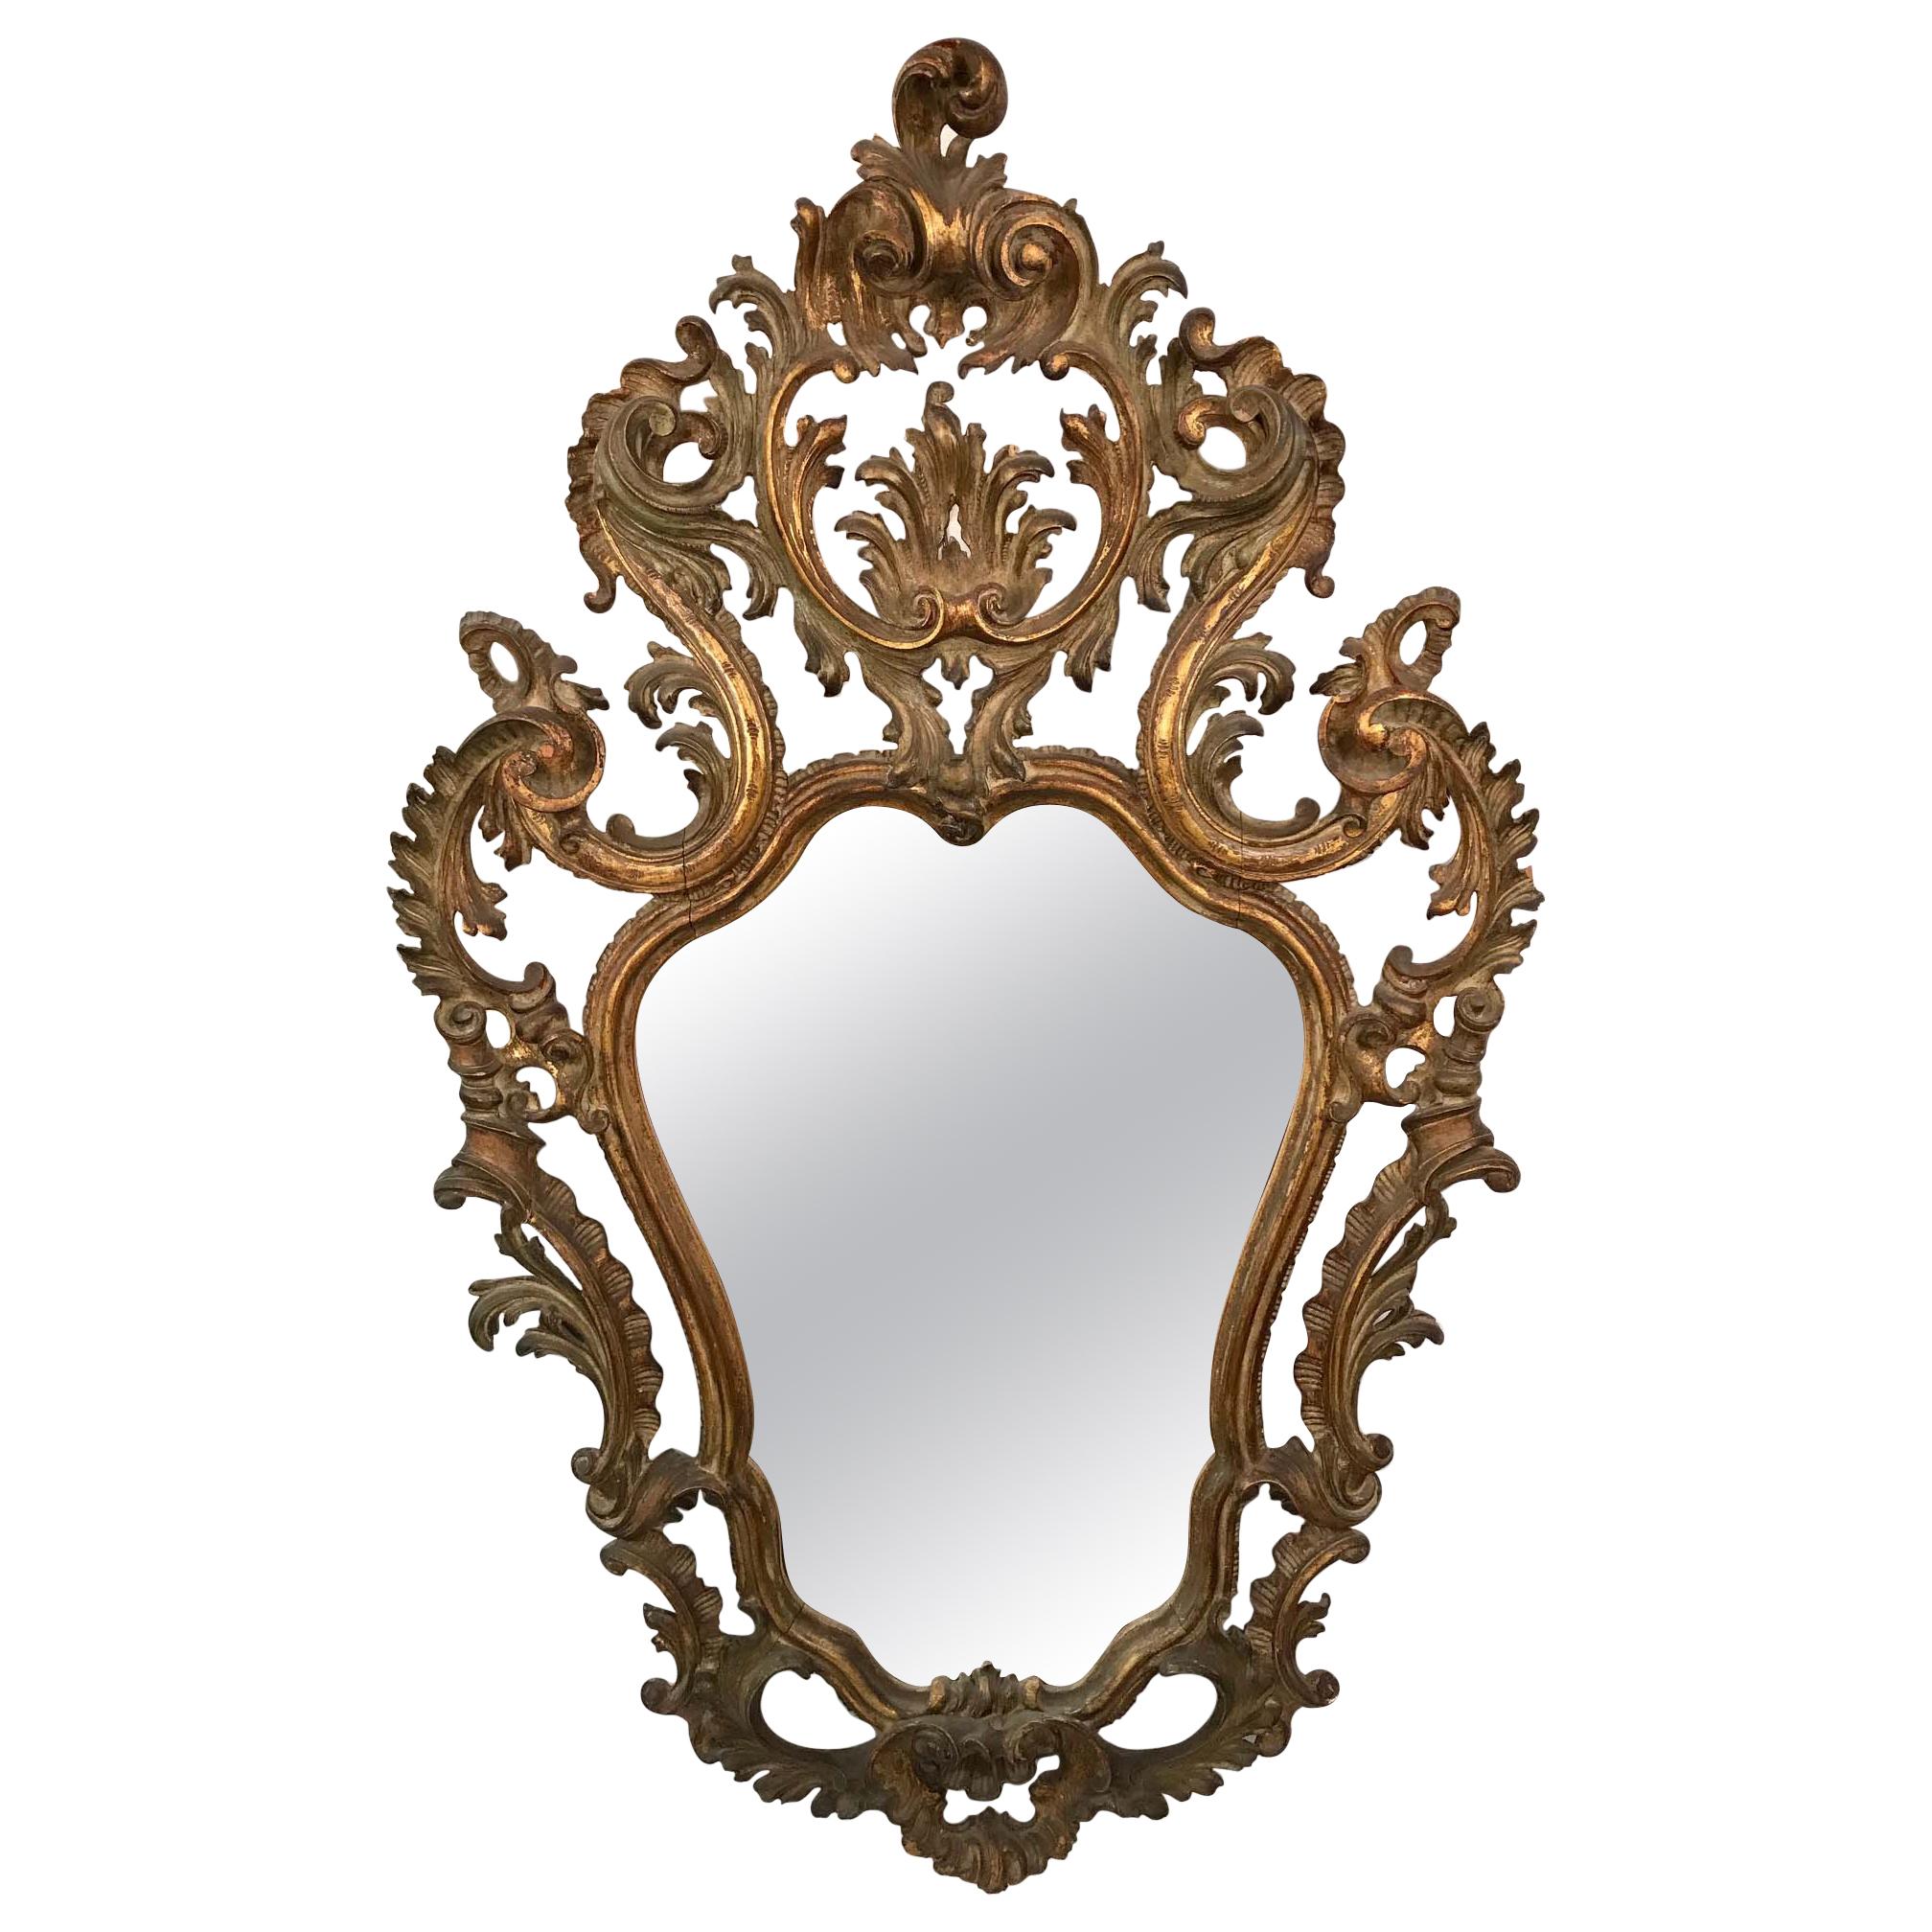 Miroir en bois doré de style baroque